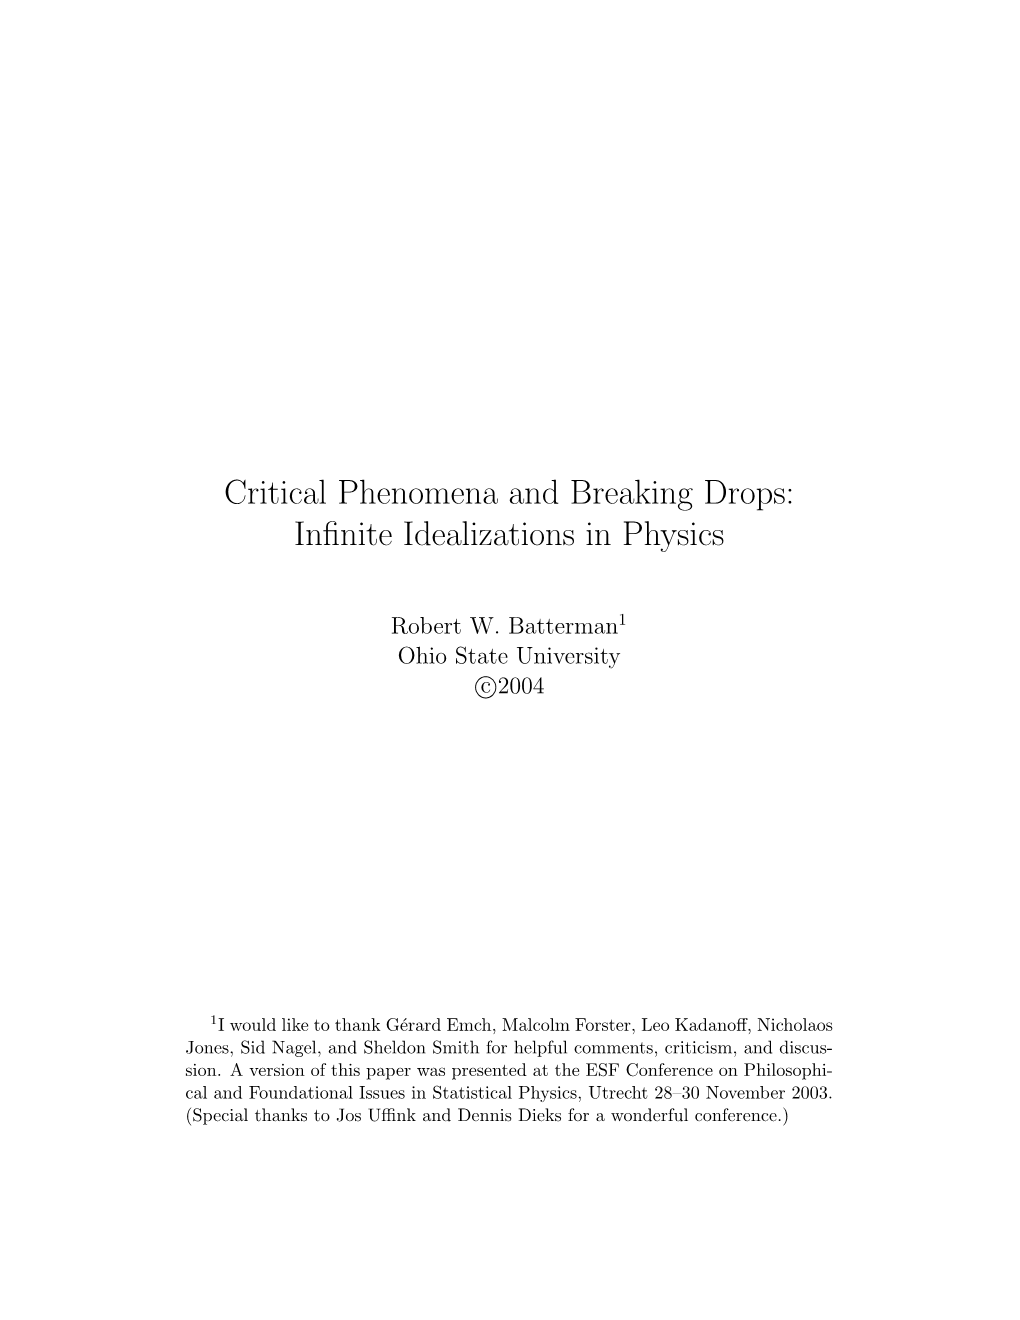 Critical Phenomena and Breaking Drops: Infinite Idealizations in Physics